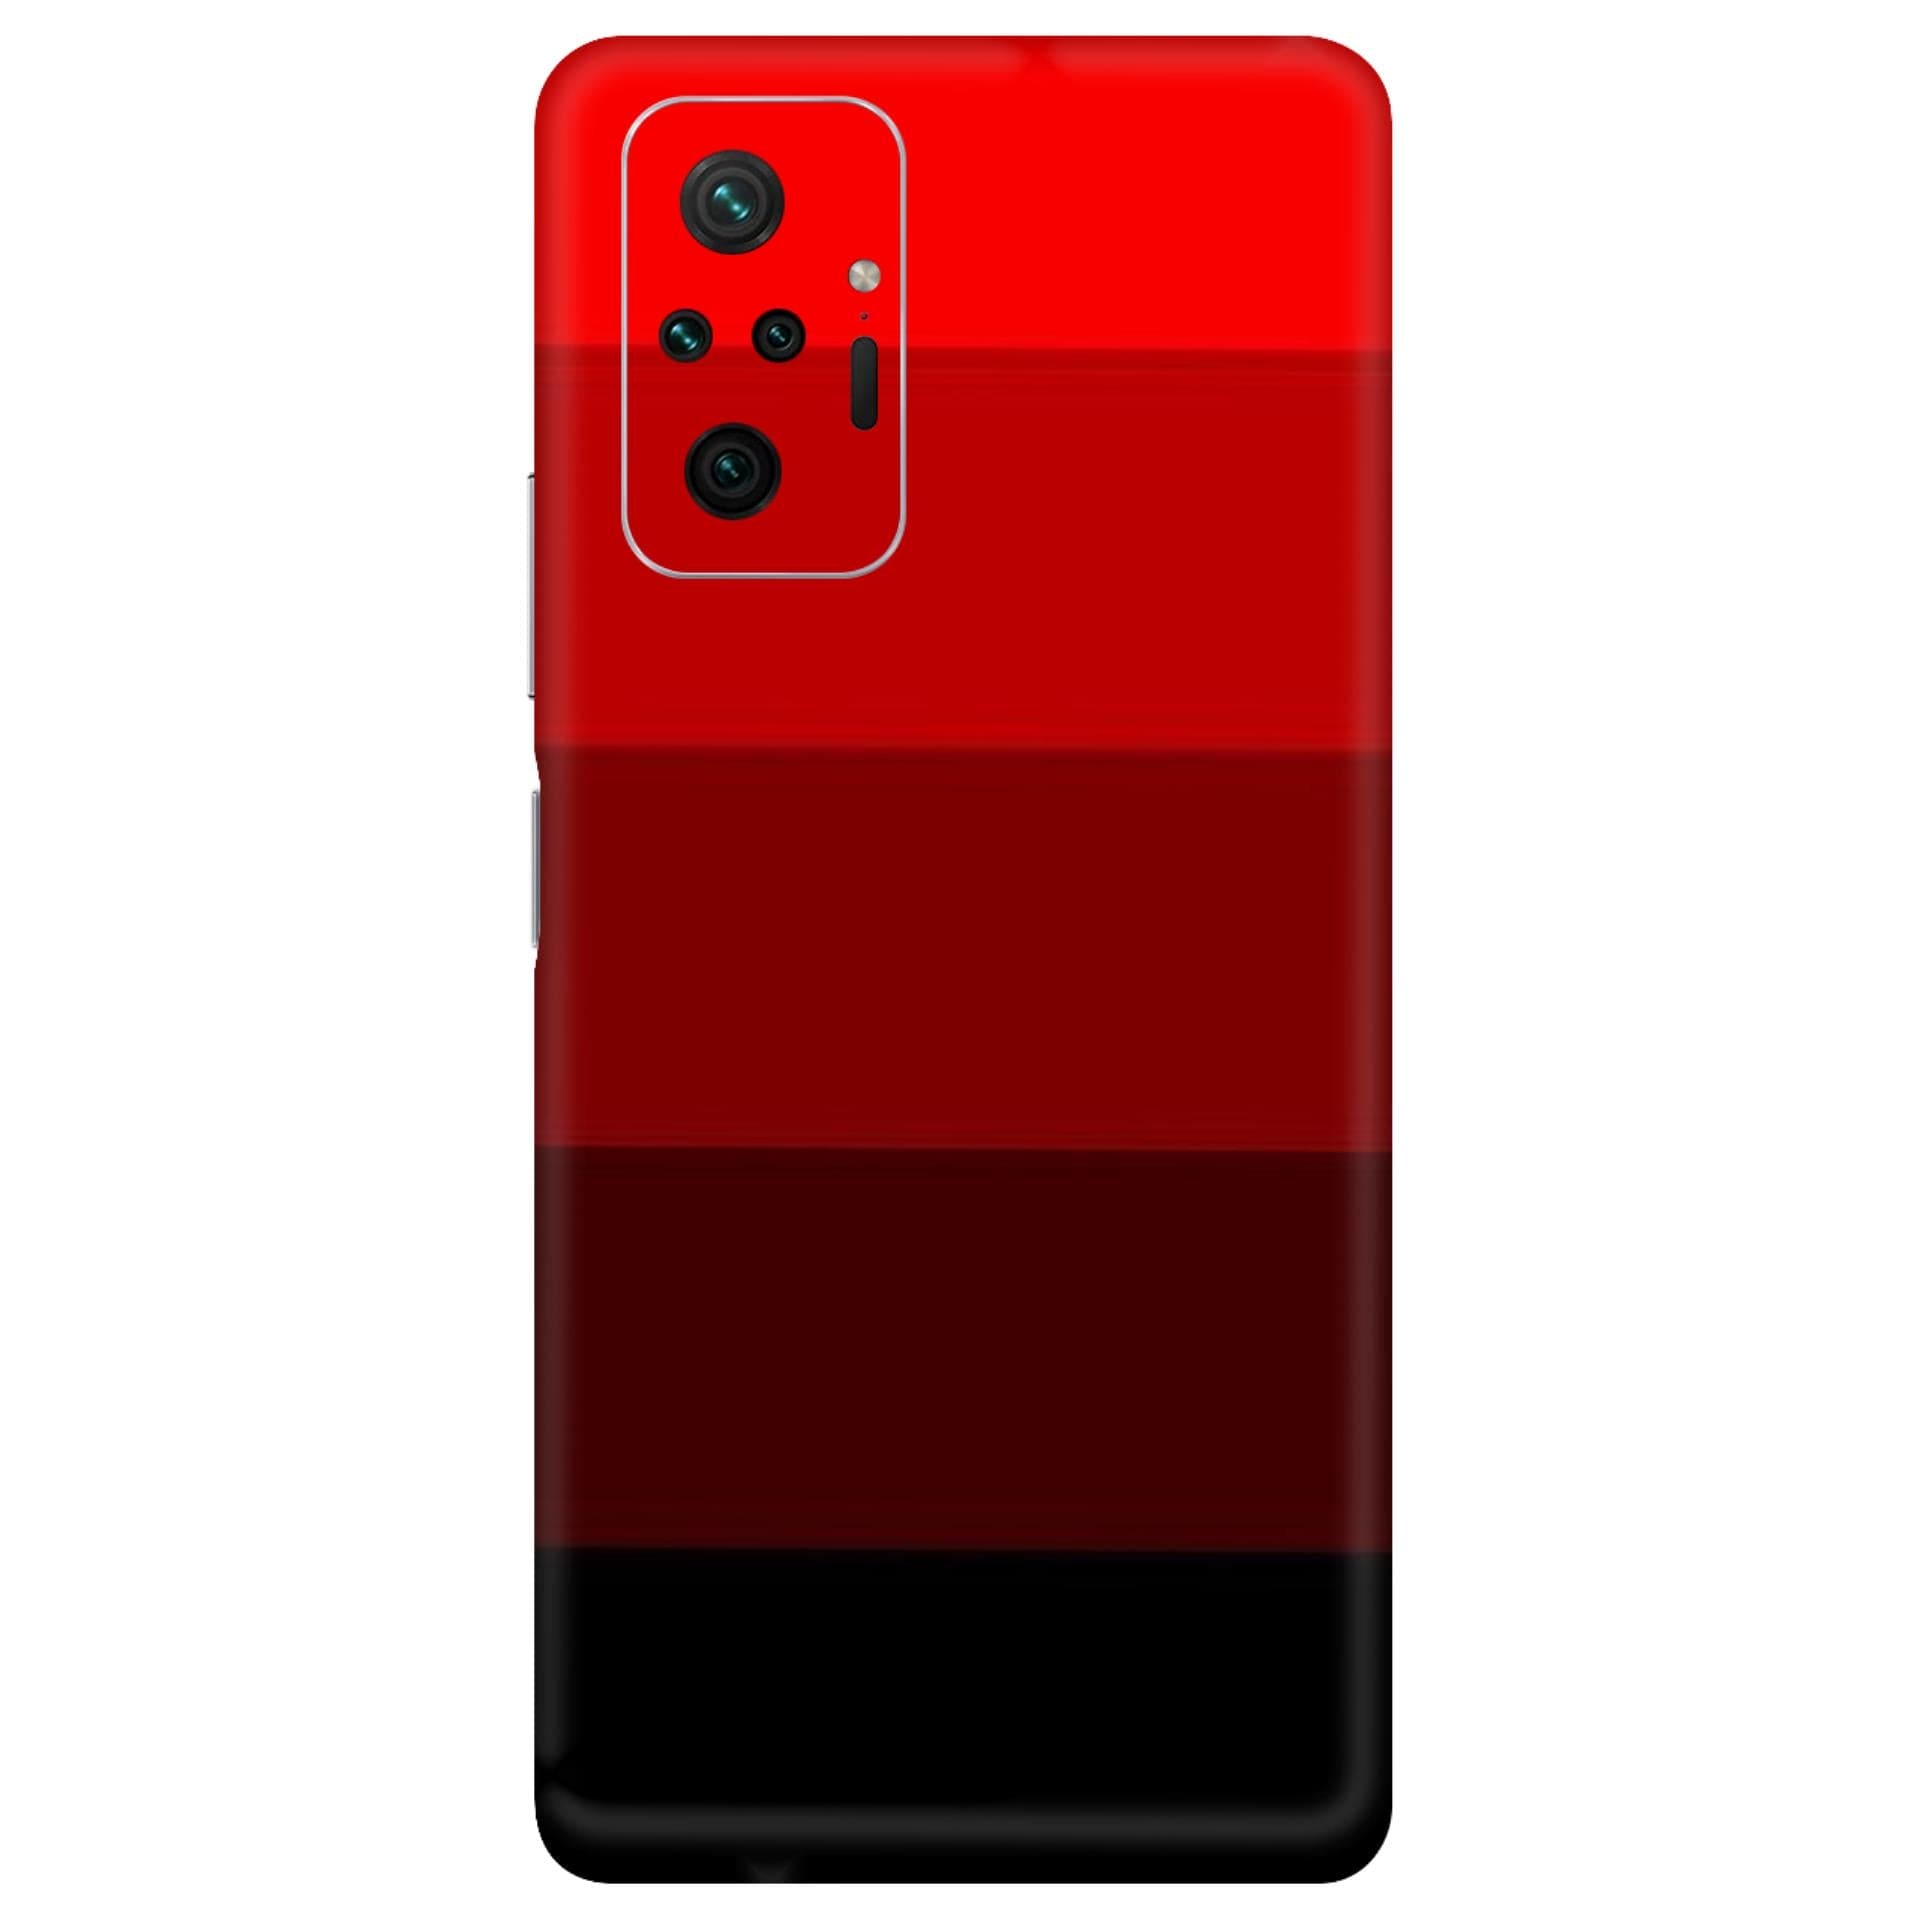 Redmi Note 10 Pro Palette Red skins